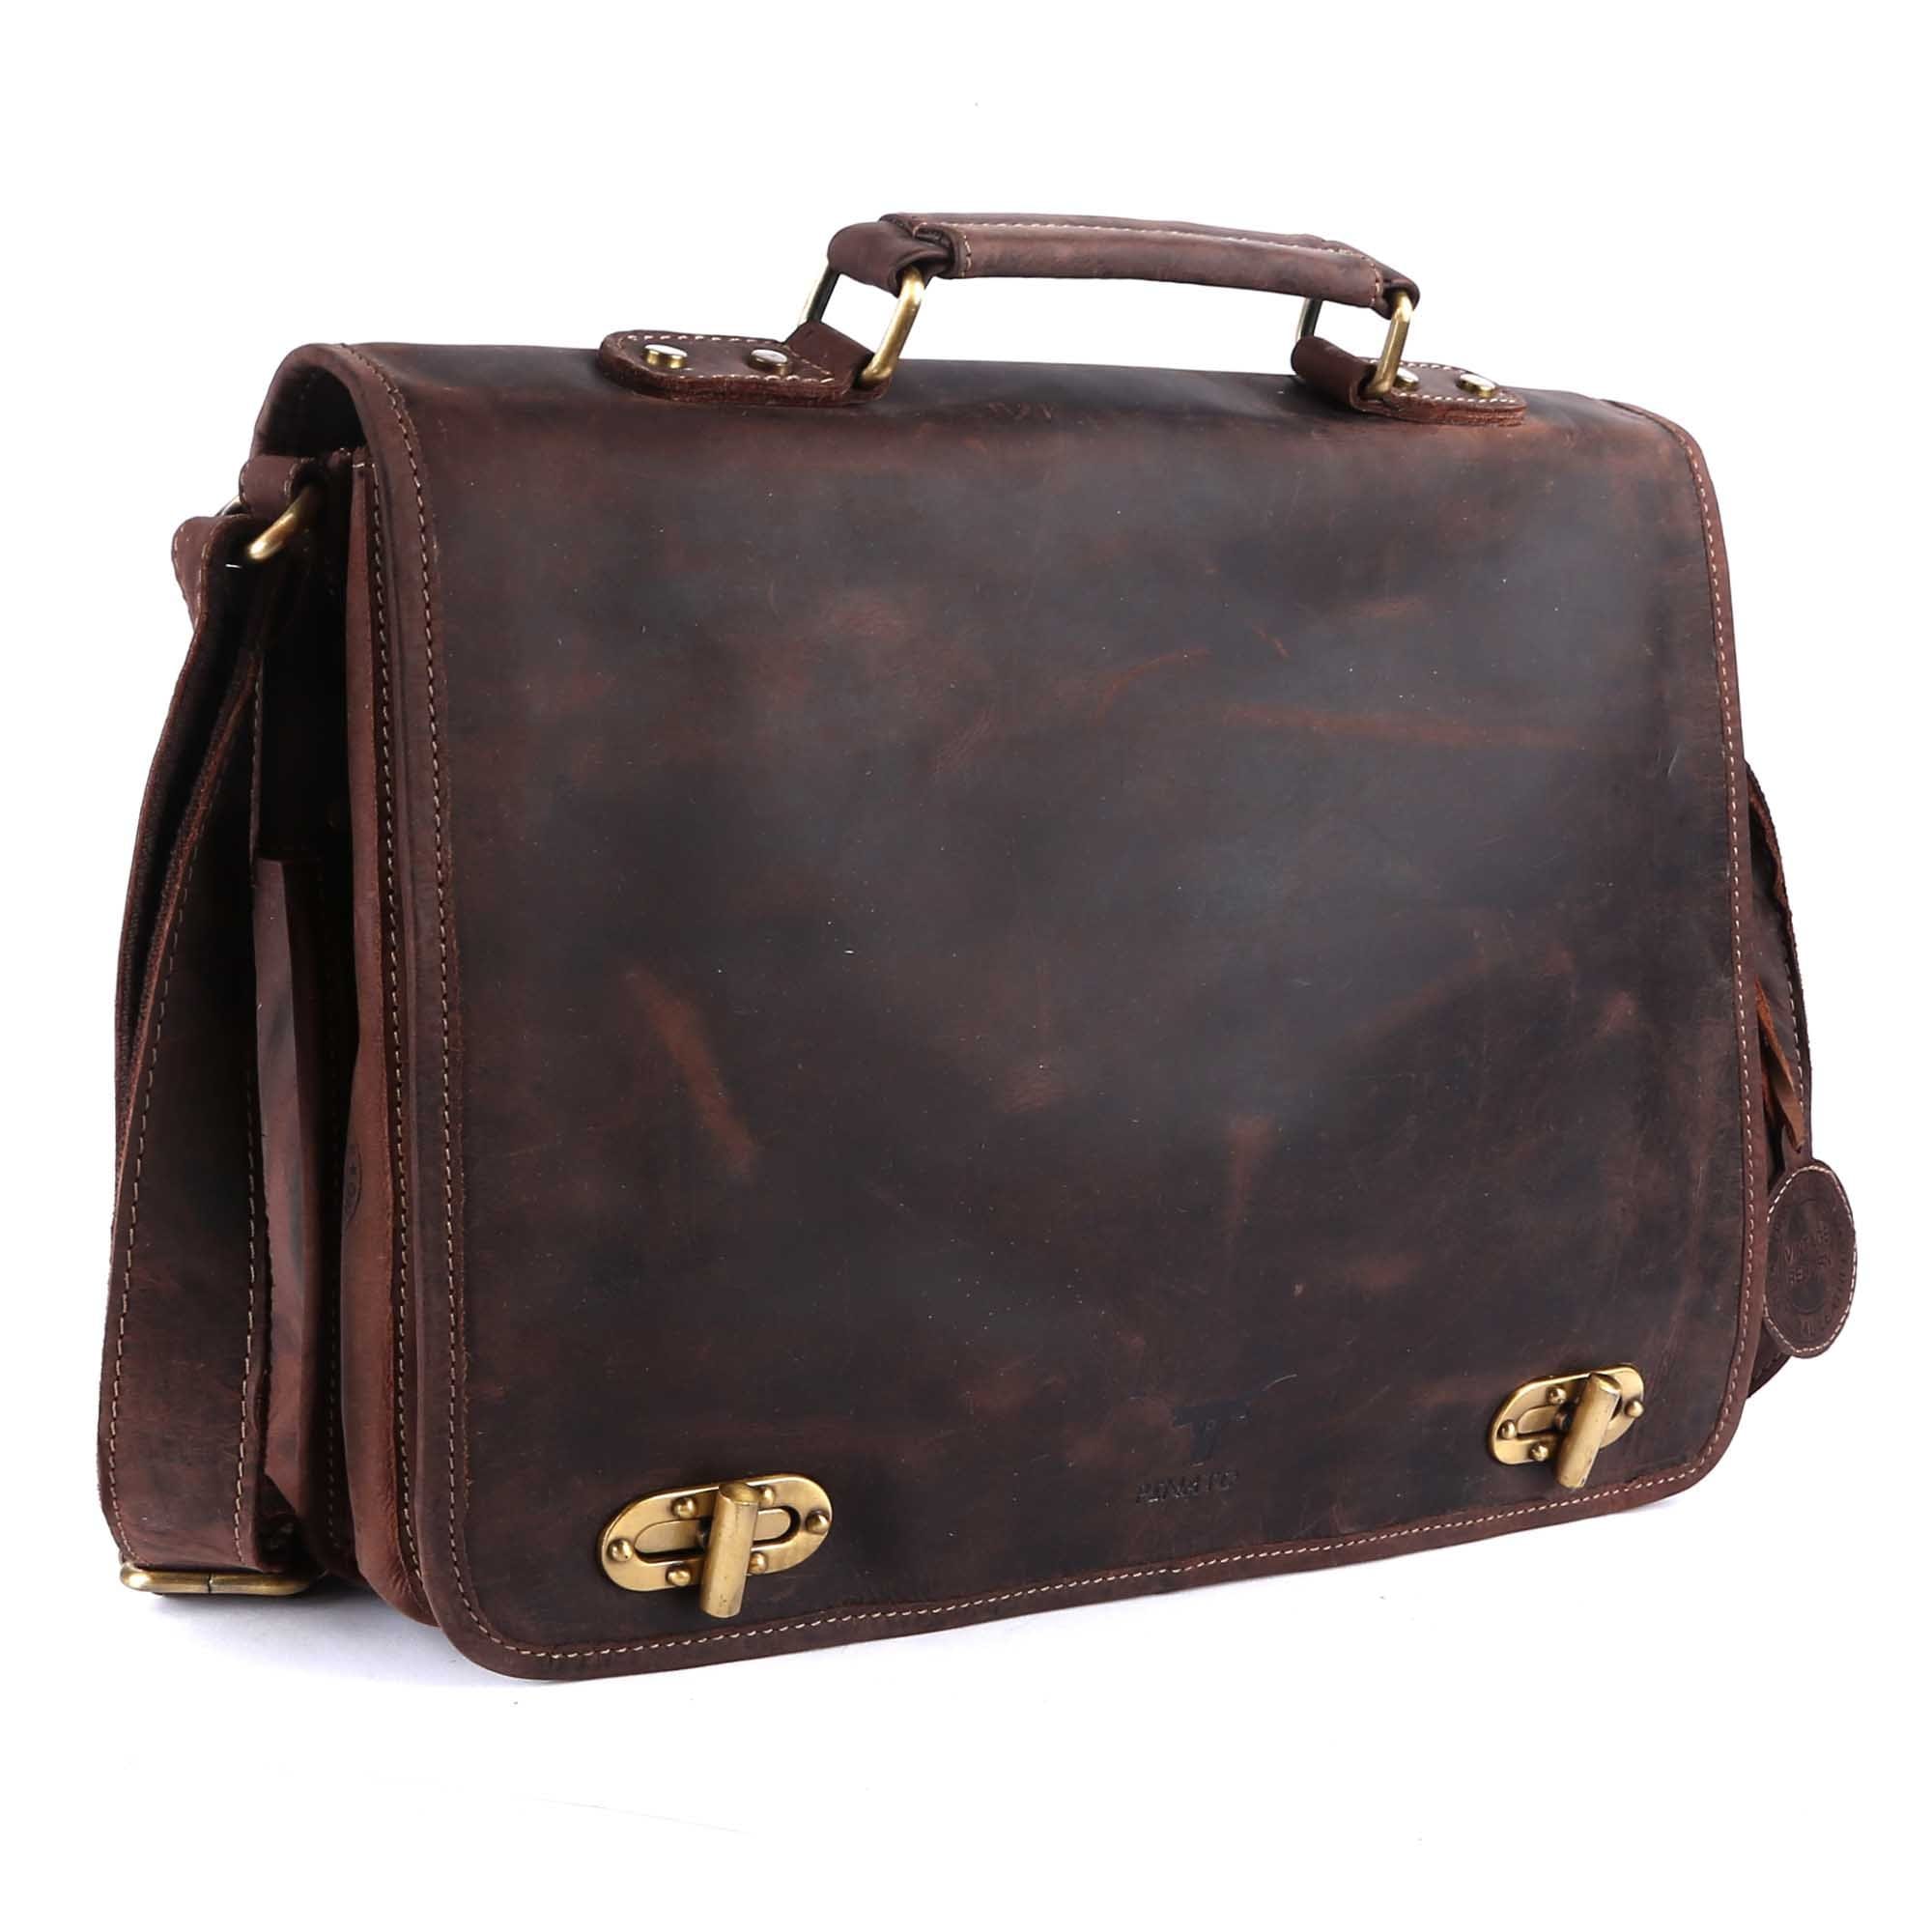 Pinato Genuine Leather Laptop Bag Brown for Men & Women (PL-6218)